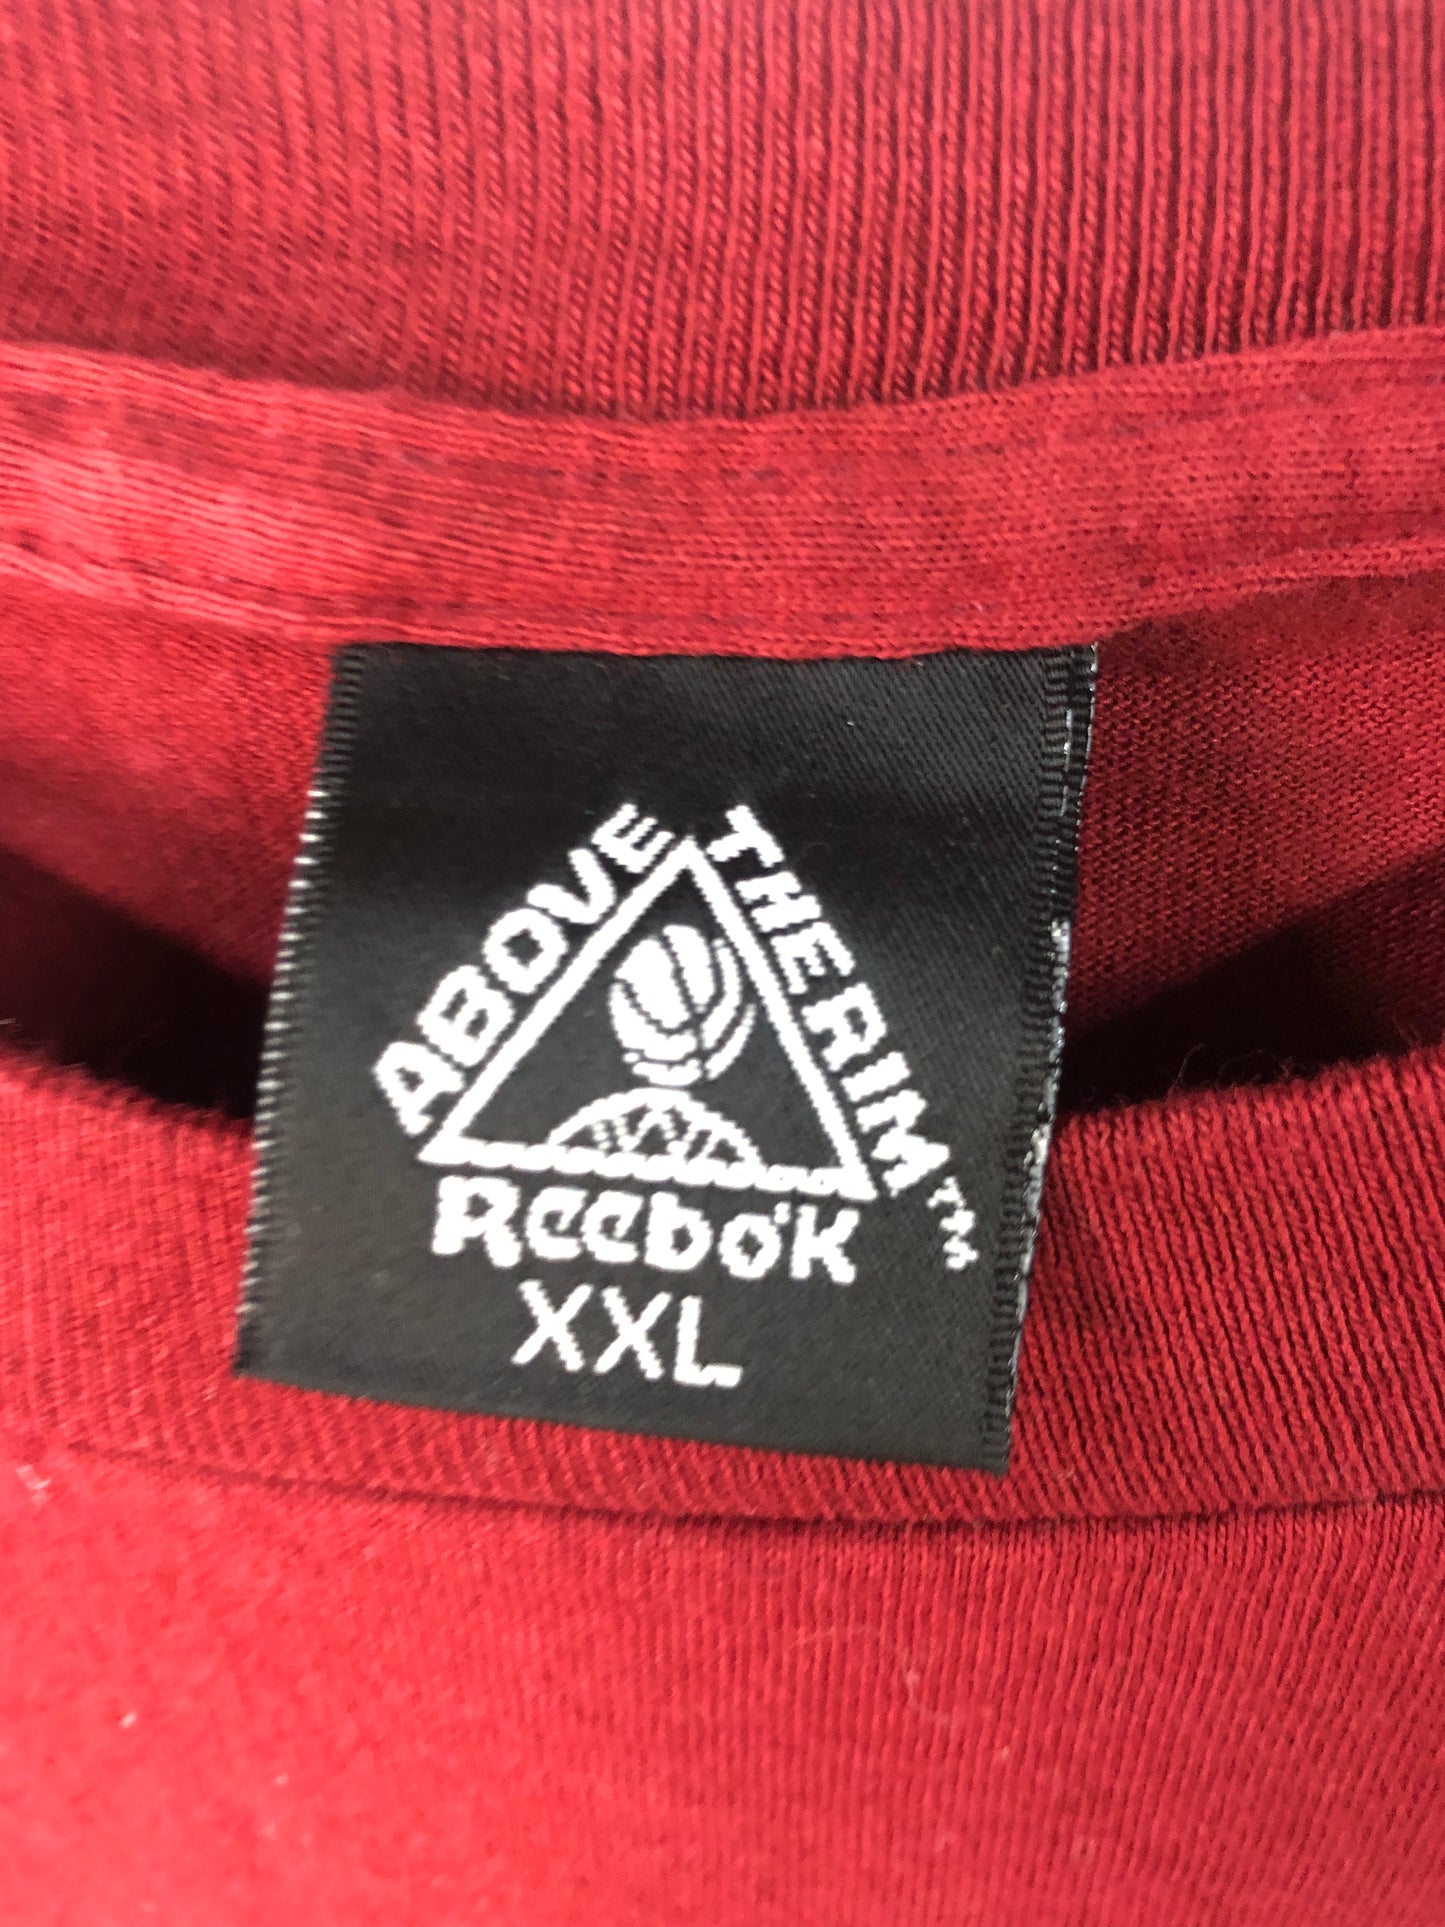 VTG Above The Rim Hoopwear Maroon Graphic Tee Sz XXL